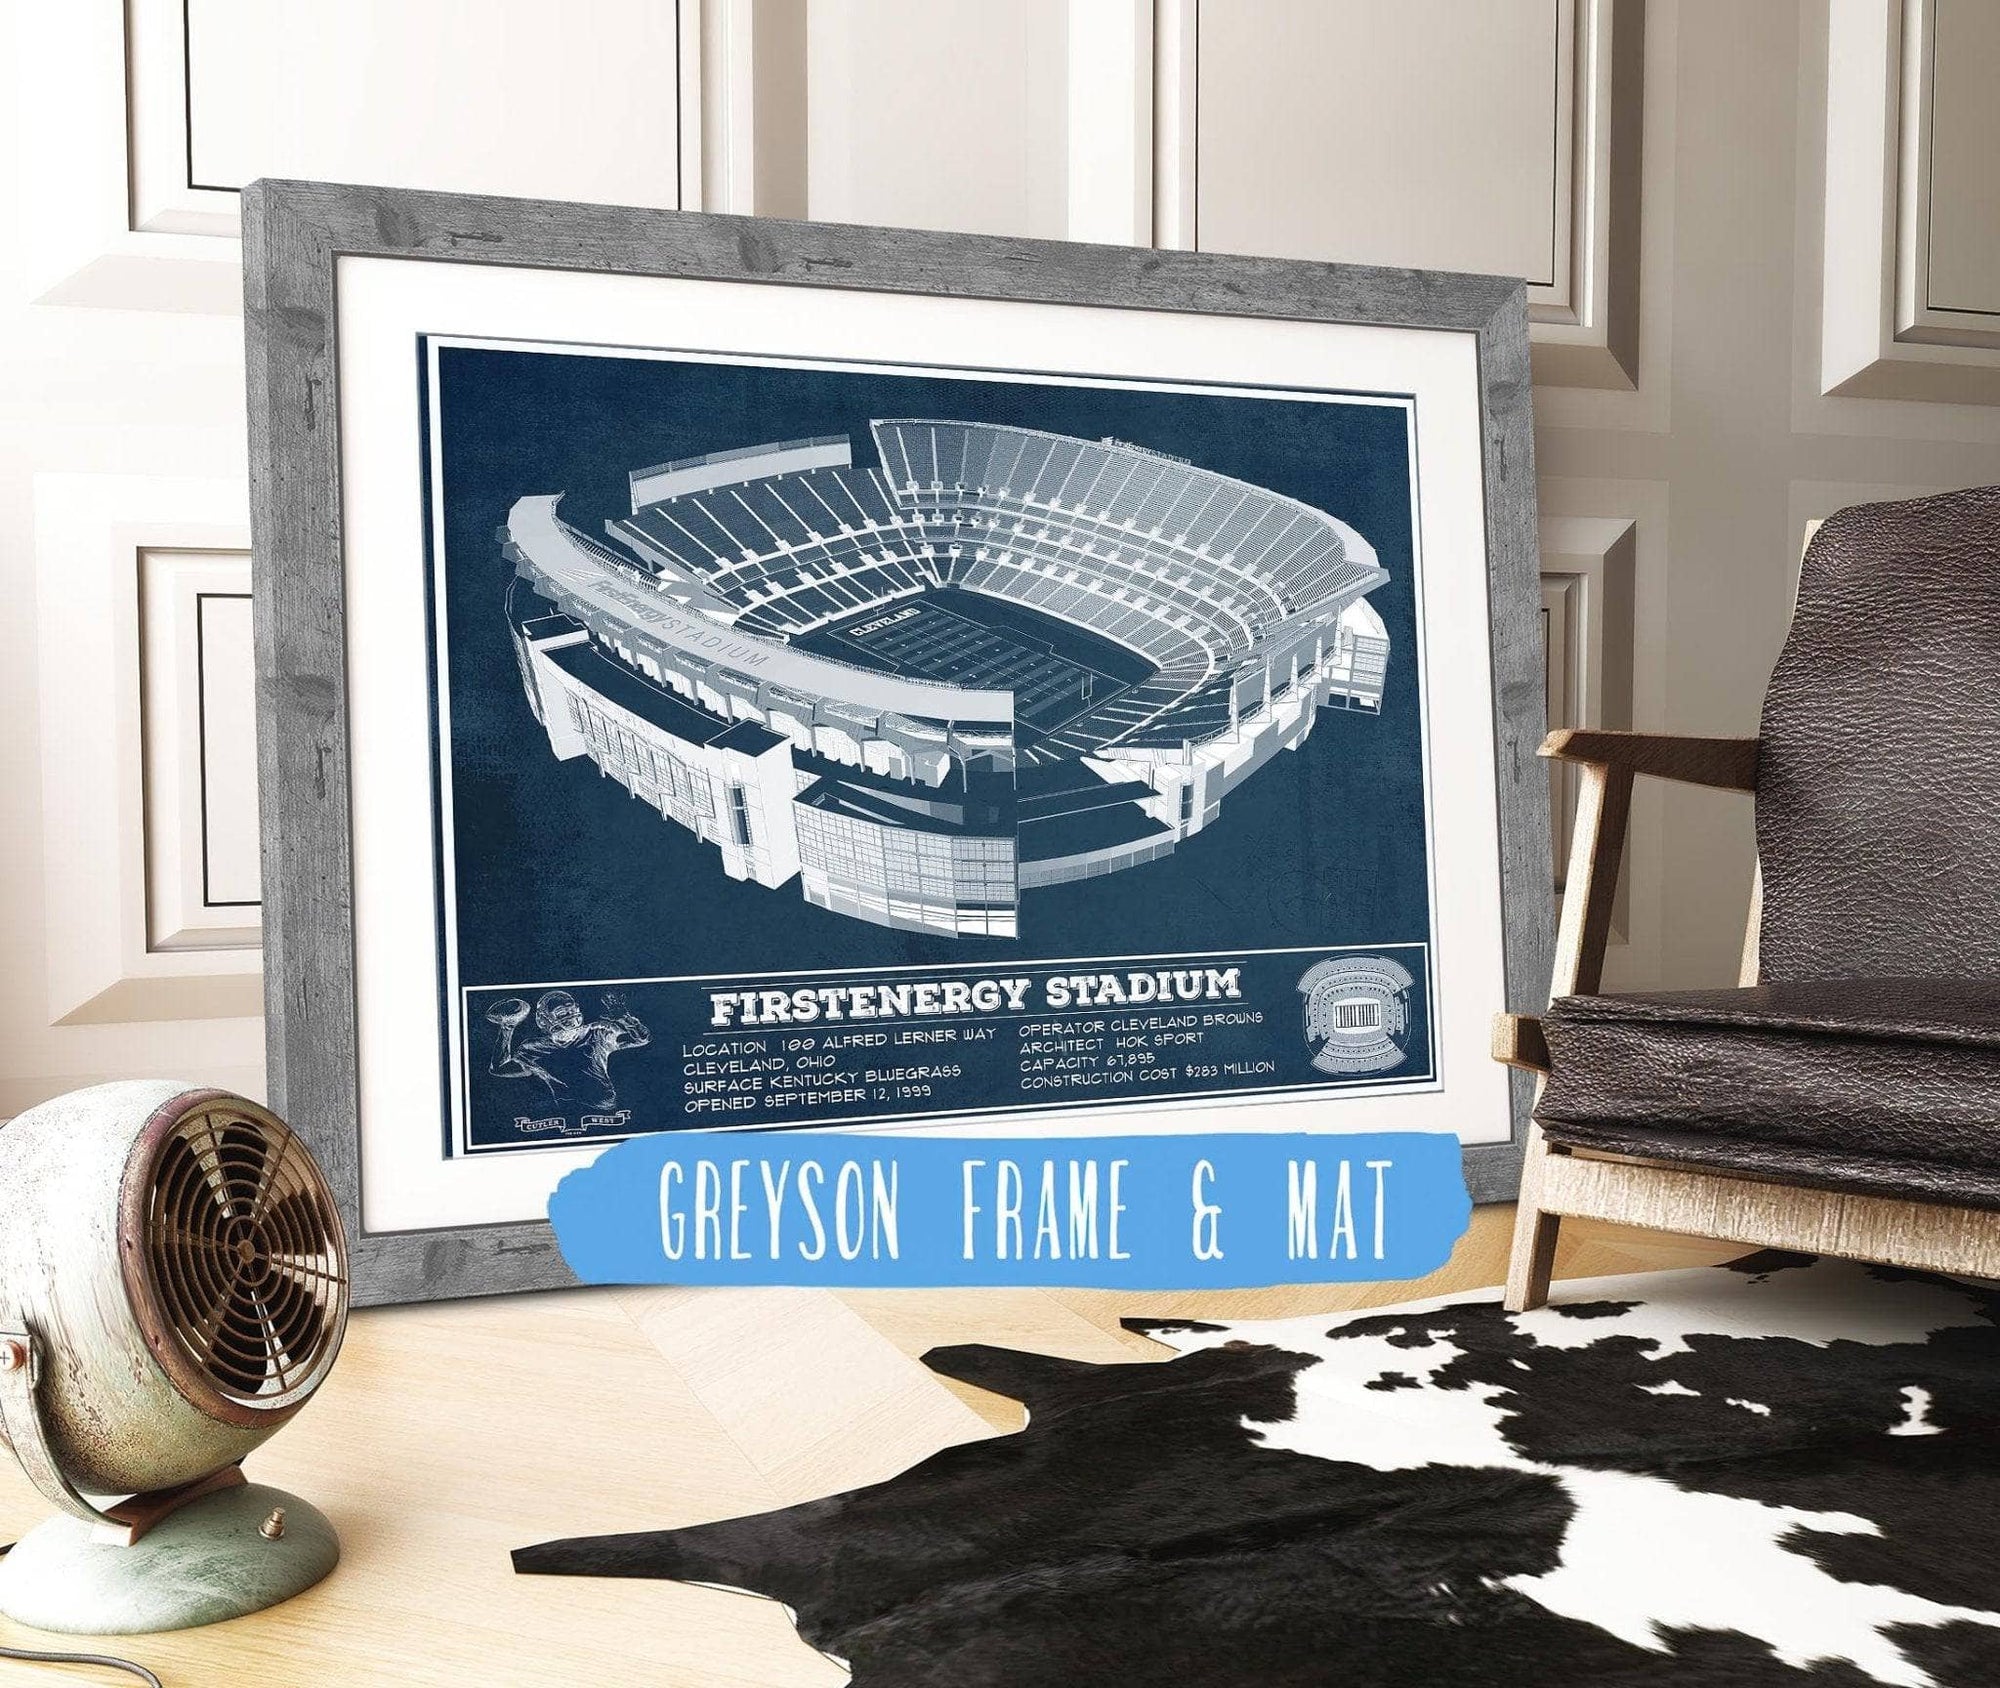 Cutler West Pro Football Collection 14" x 11" / Greyson Frame & Mat Cleveland FirstEnergy Stadium - Vintage Football Print 69068269_60295